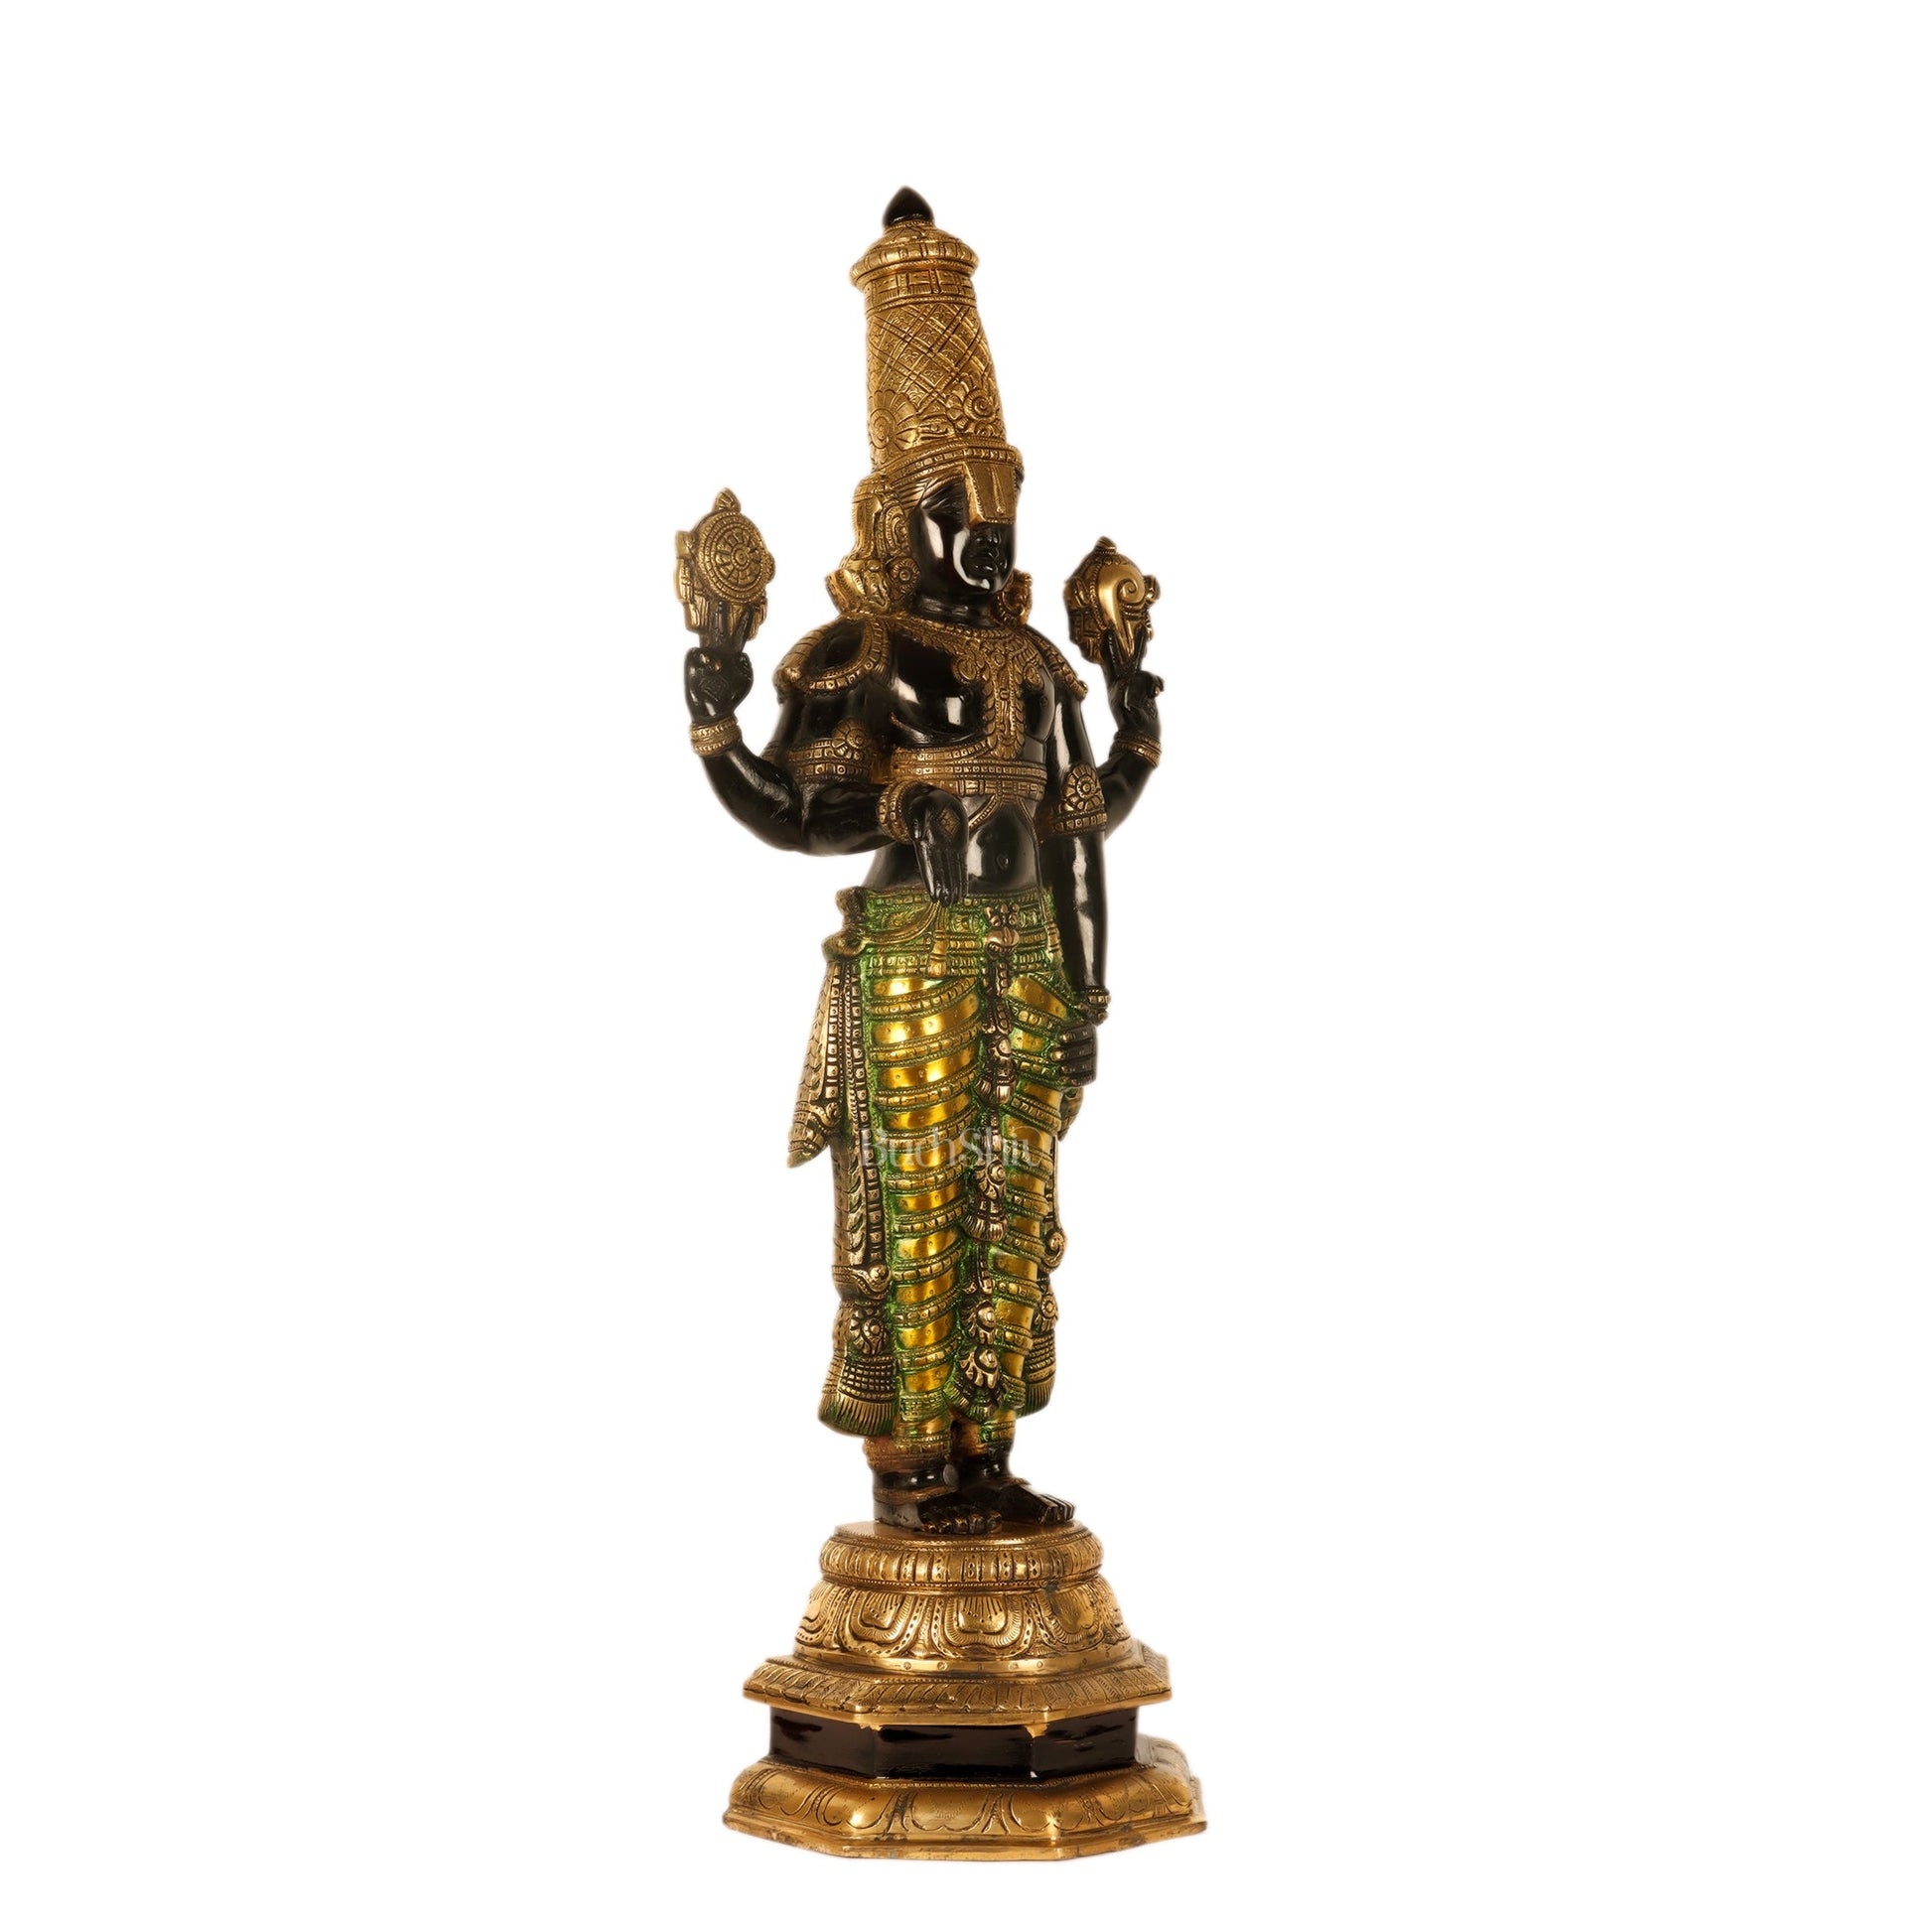 Tirupati Balaji Venkateshwar Brass Statue/Idol Black and Gold 33 inches - Budhshiv.com